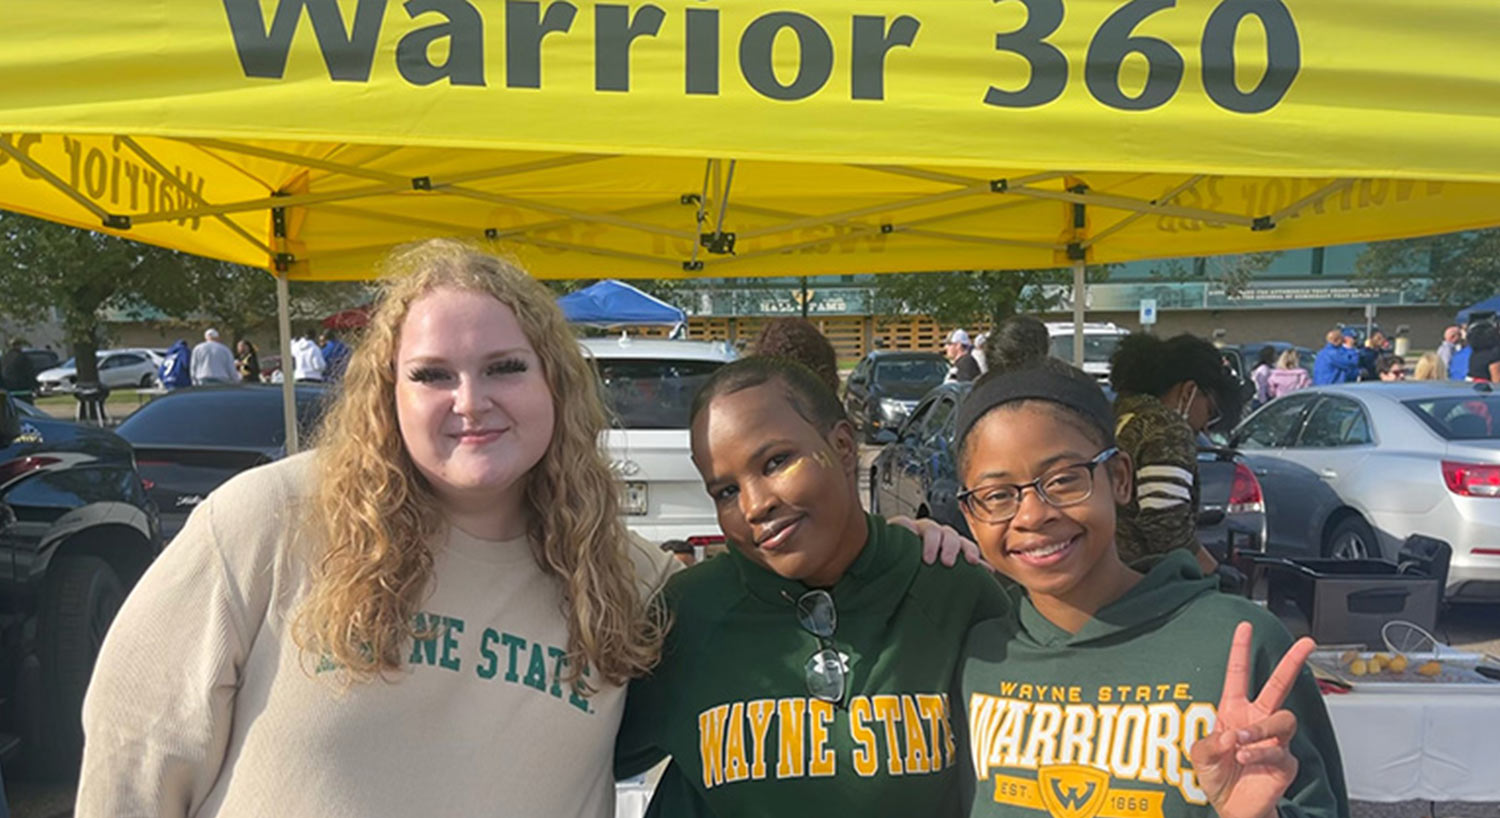 three female students photographed together wearing Wayne State sweatshirts